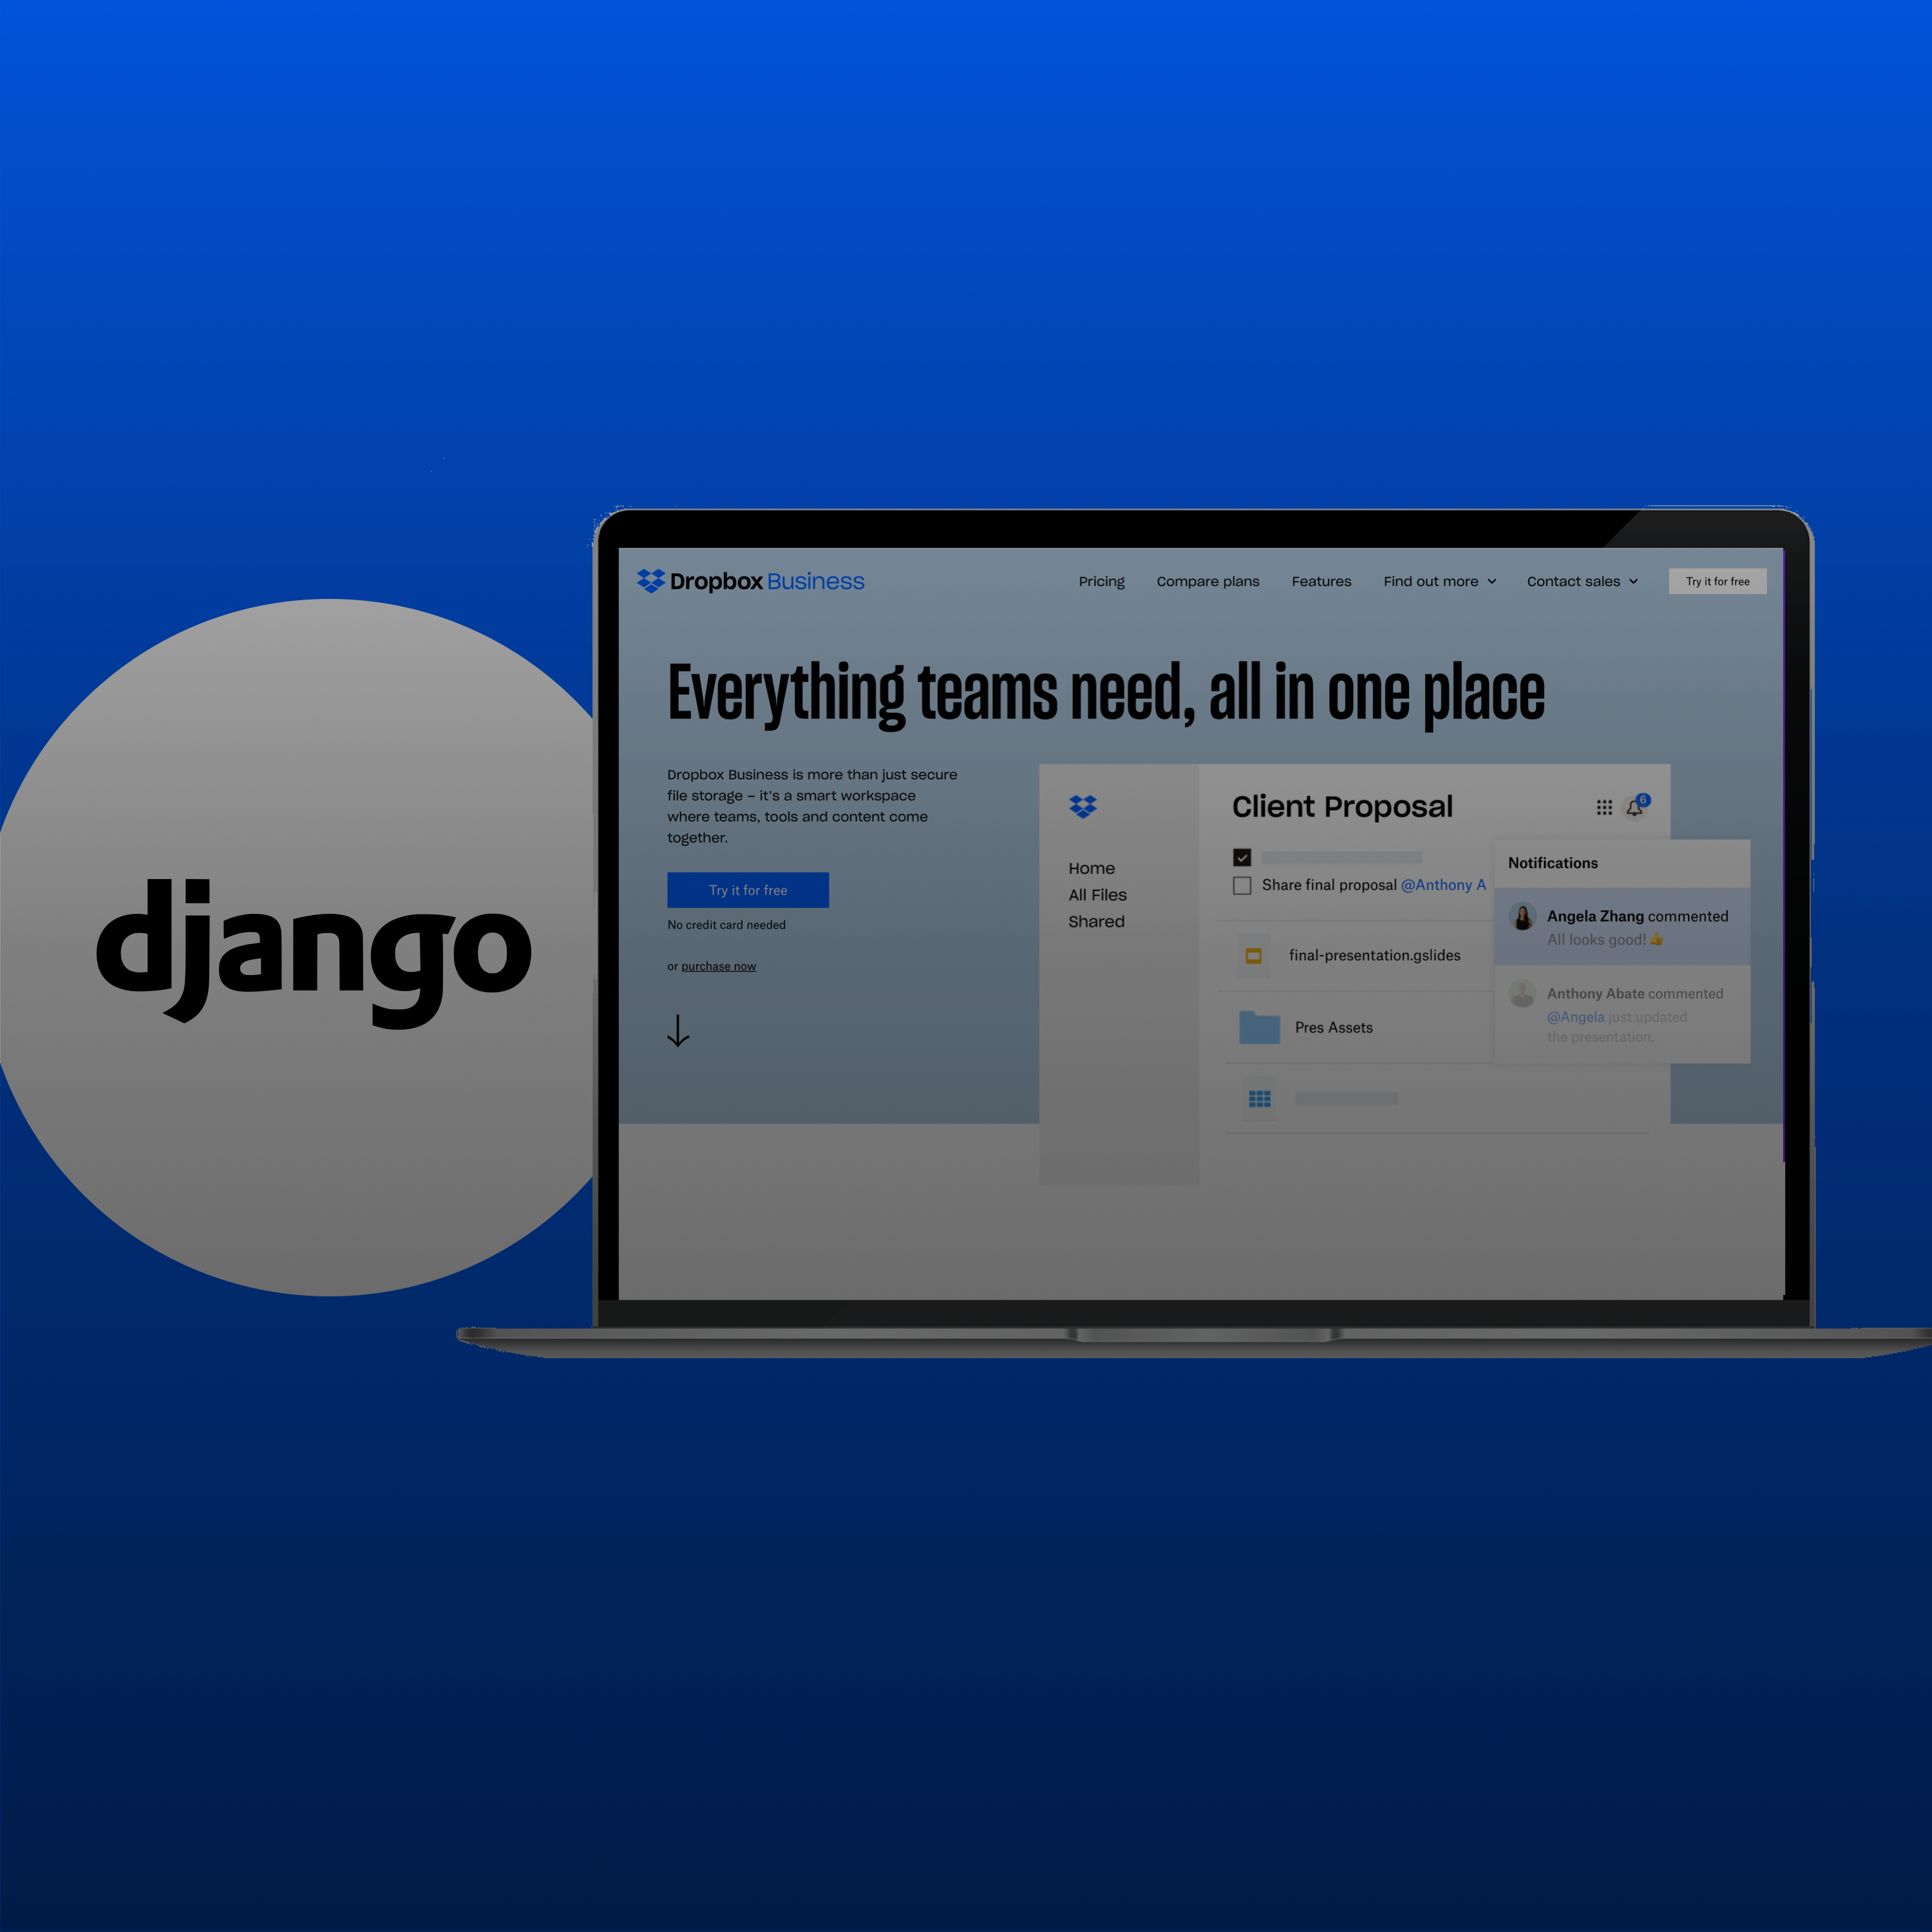 popular django websites and application examples